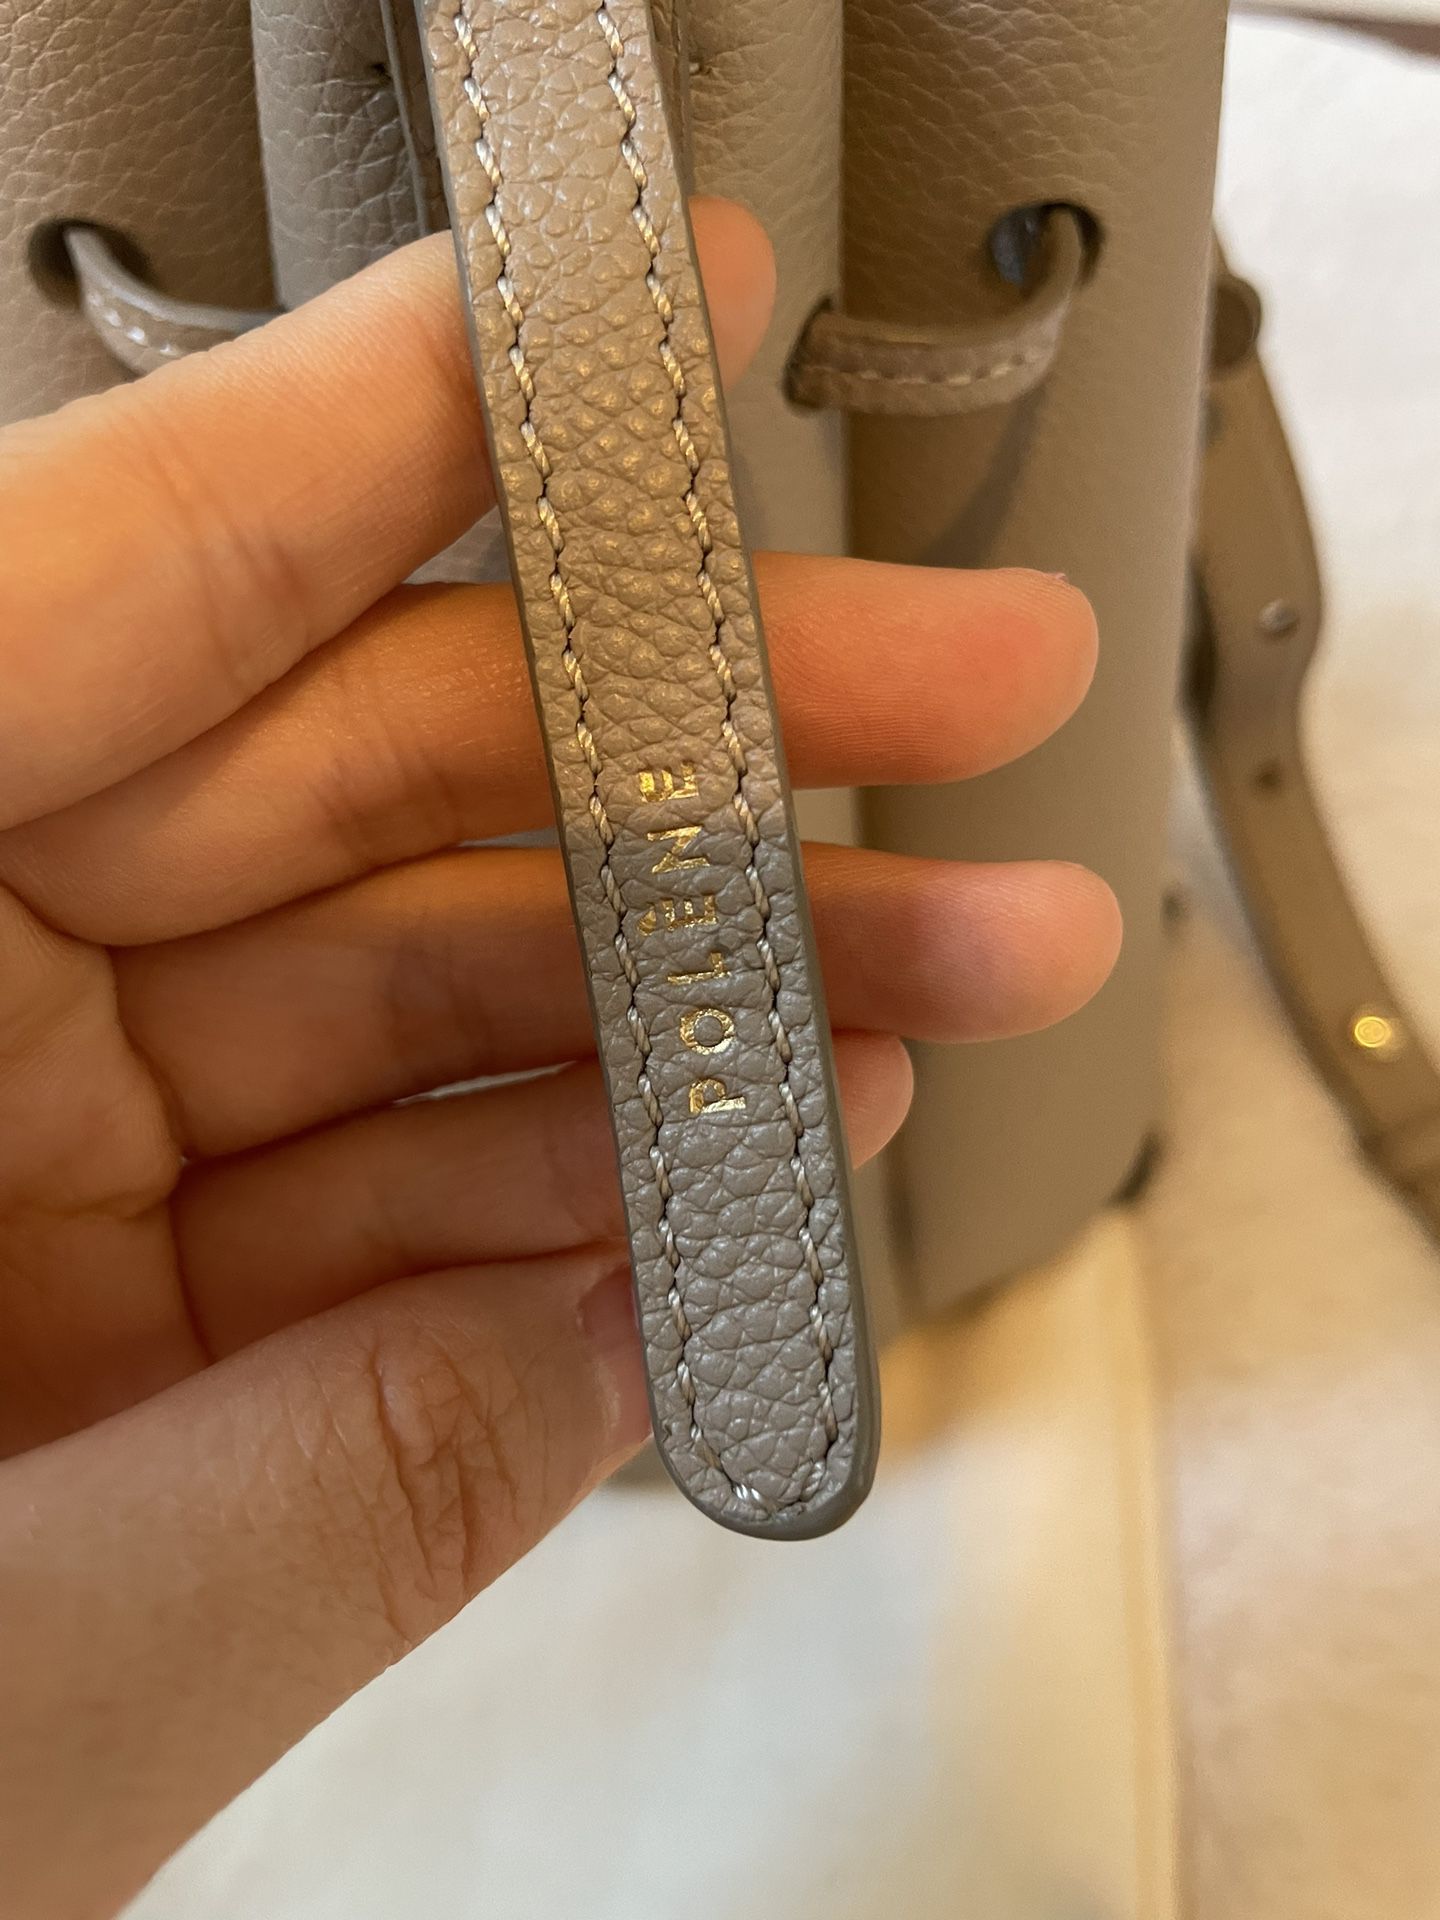 Polène | Bag - Béri - Taupe Textured Leather